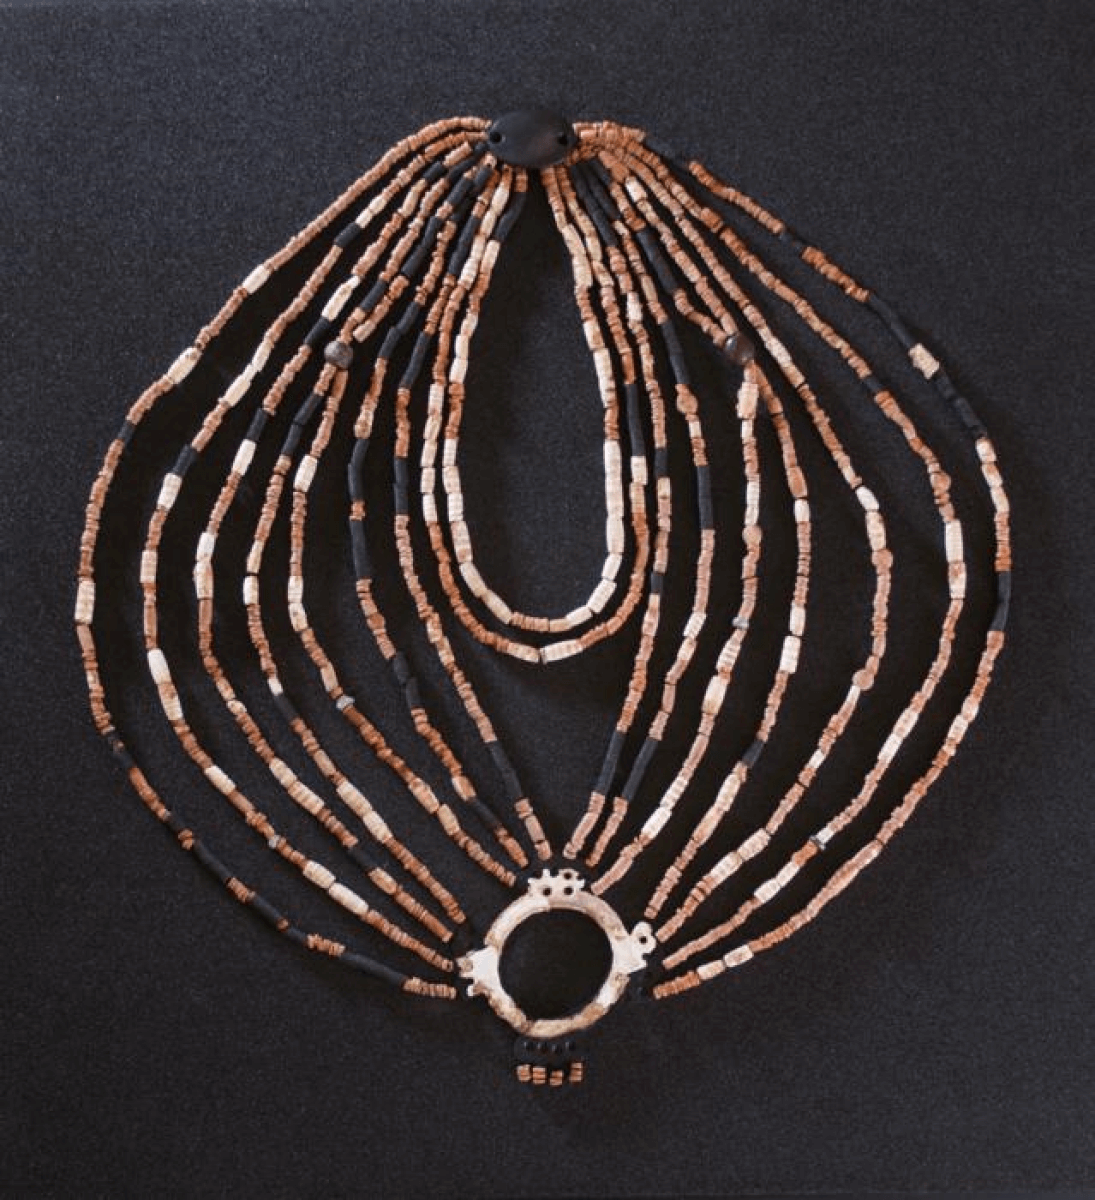 ancient necklace reconstruction